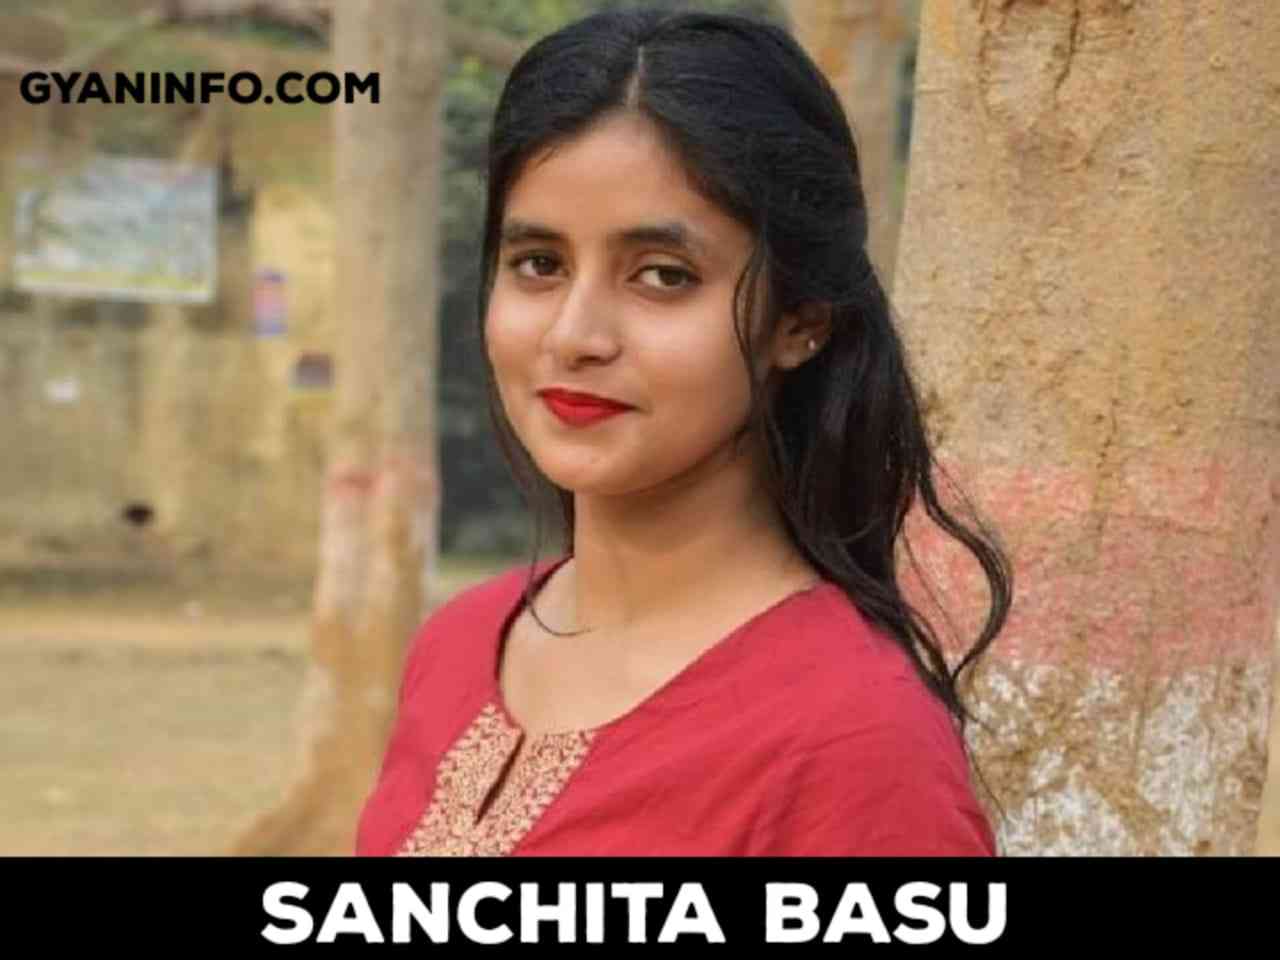 Sanchita Basu Biography, Height, Age, Weight, Body Measurements, Boyfriend, Education, Family, Parents, Net Worth, Wiki, Photos & More